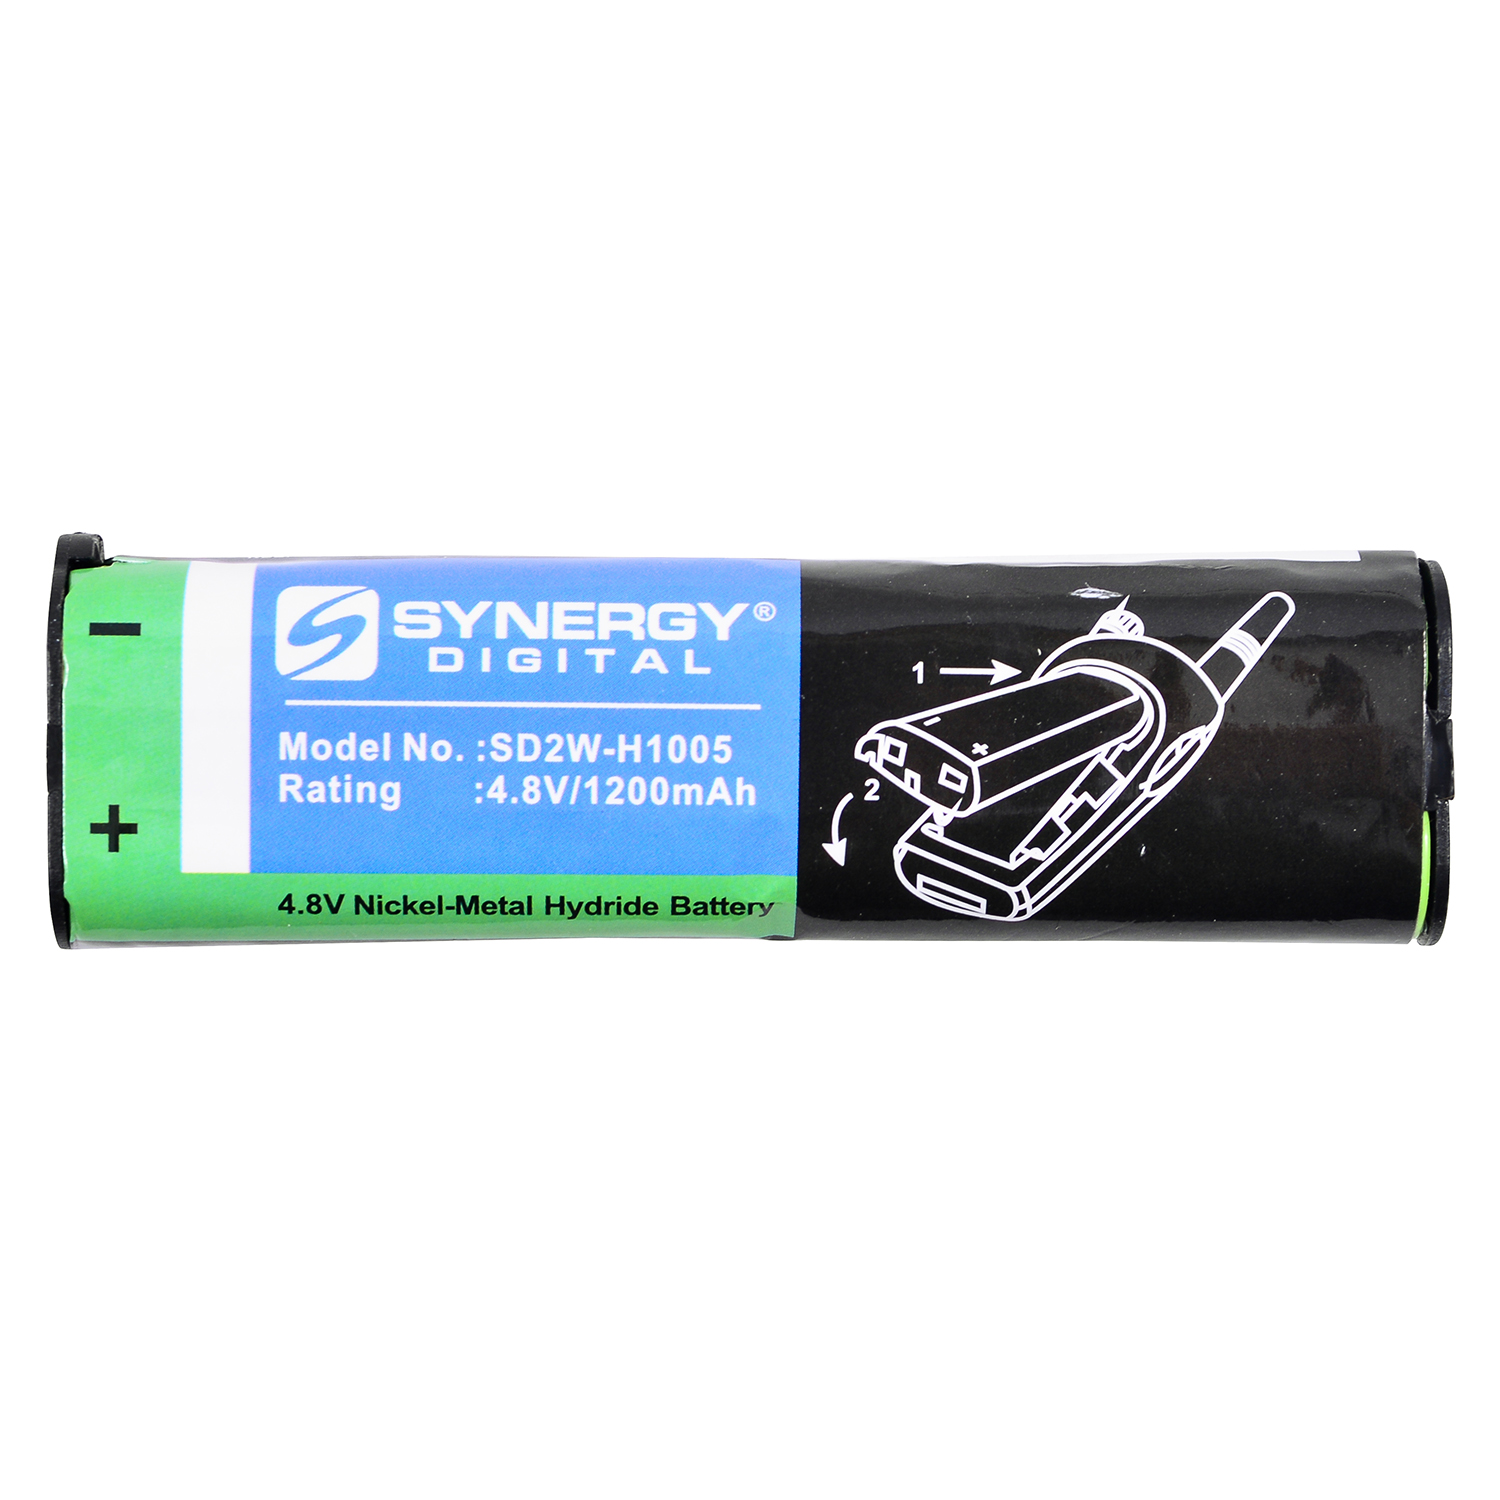 Batteries for Nextel2-Way Radio